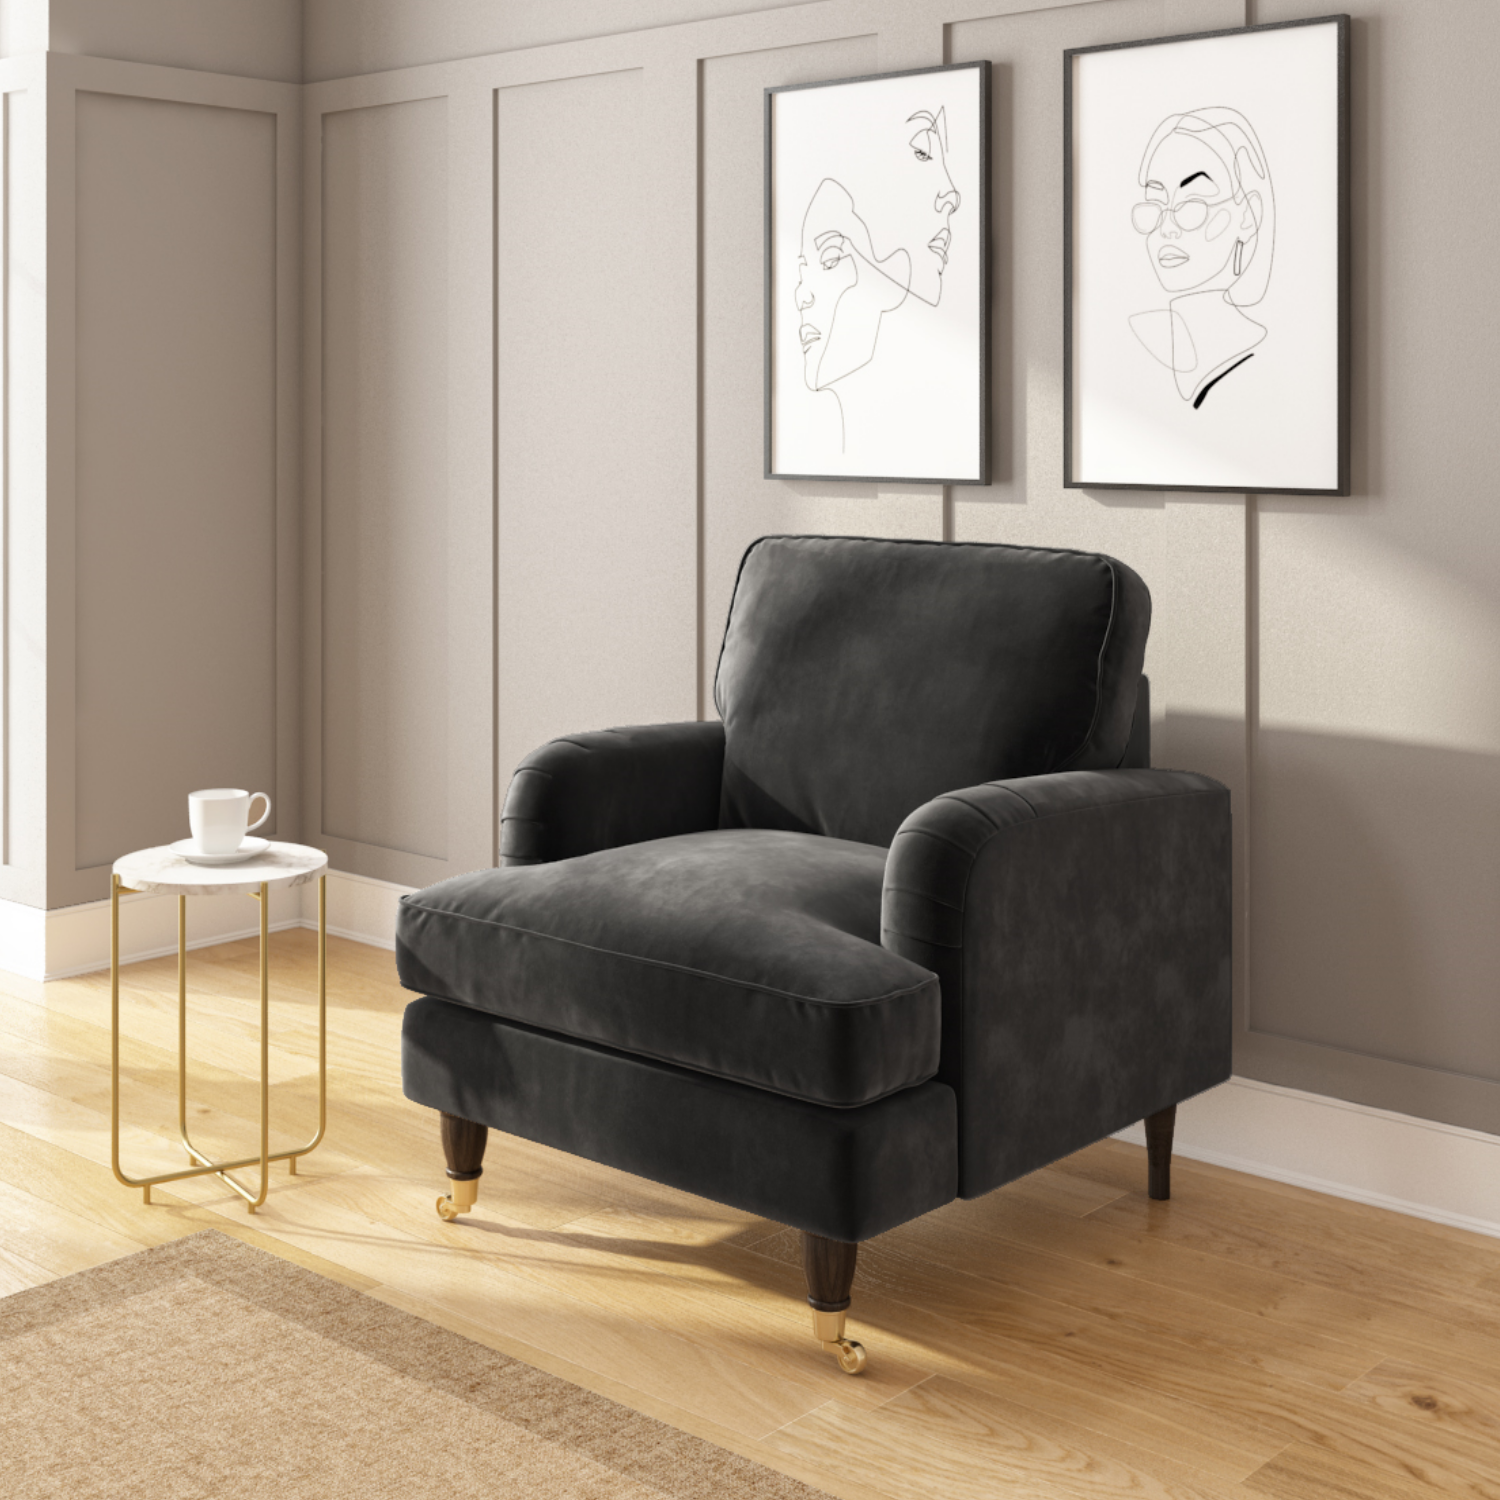 Photo of Charcoal velvet armchair - payton